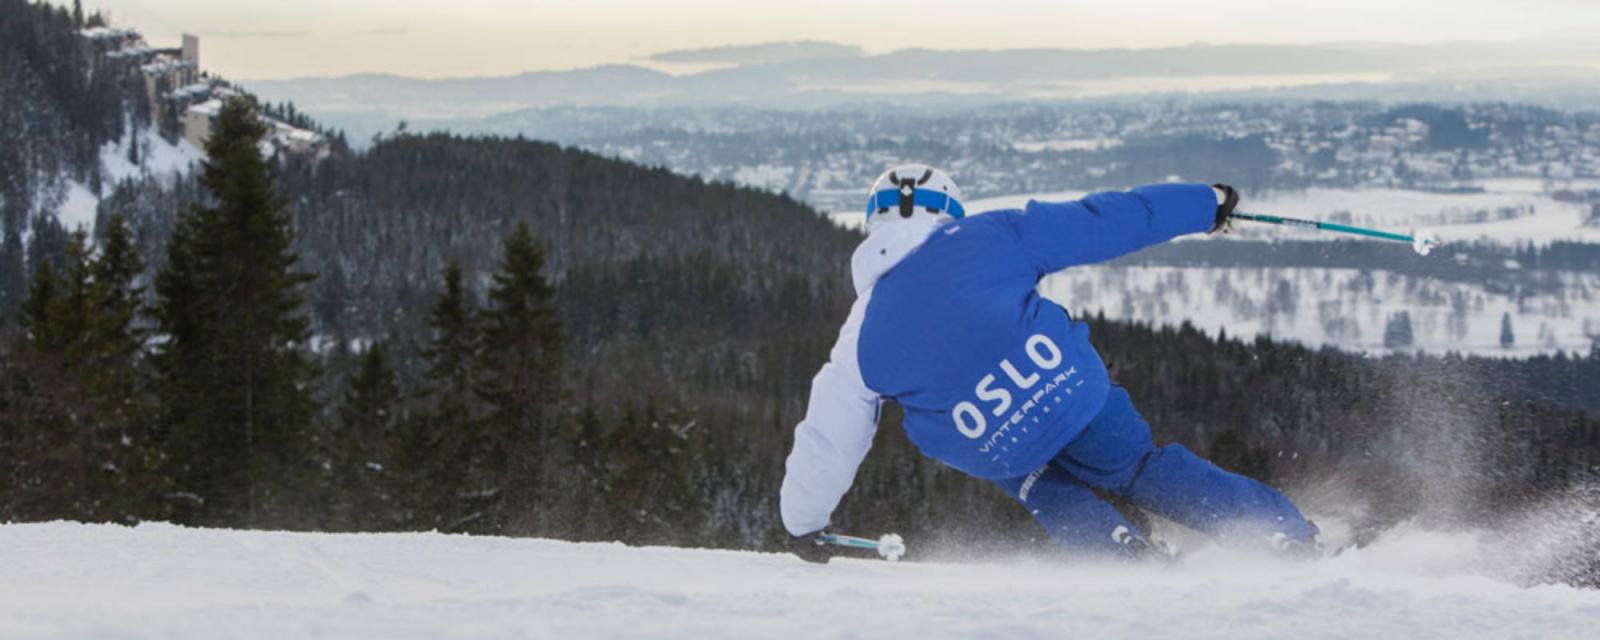 Ski & City: sneeuwpret in Oslo Vinterpark | CityZapper 